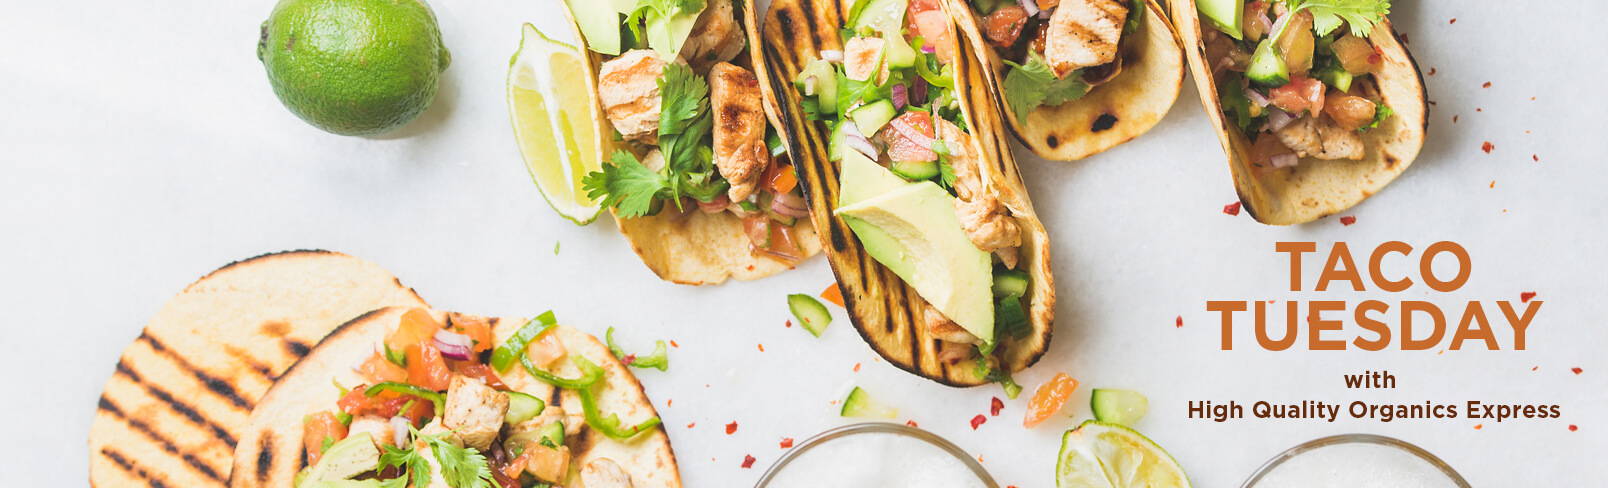 High Quality Organics Express Tacos with chicken and avocado